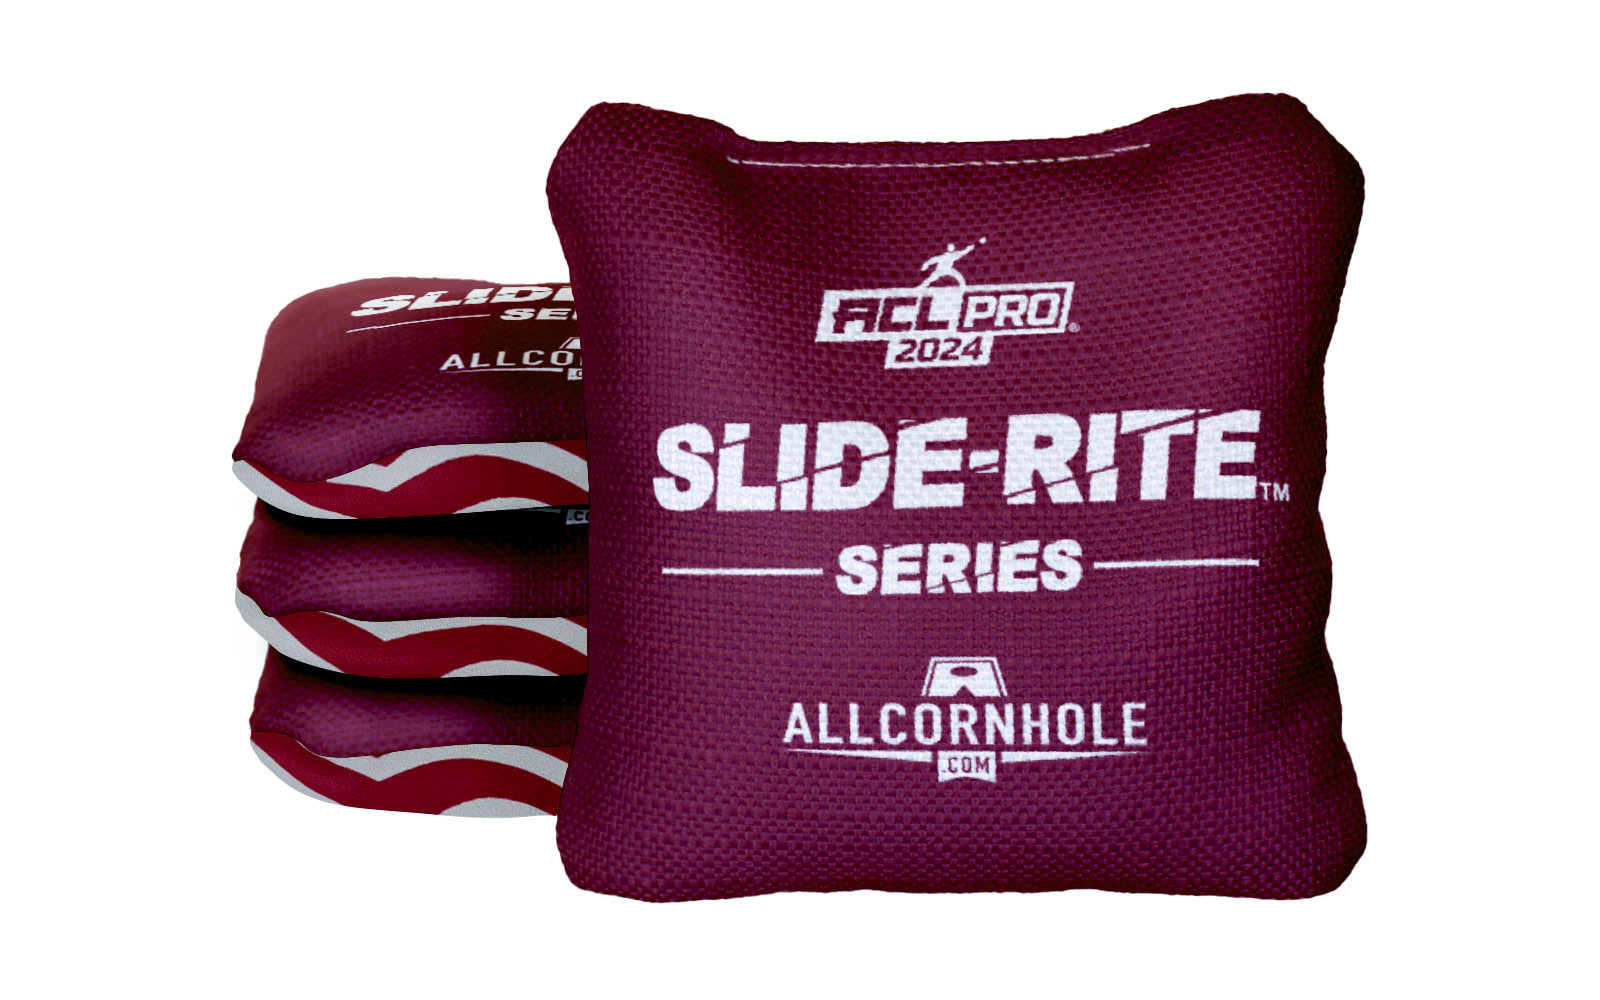 Officially Licensed Collegiate Cornhole Bags - Slide Rite - Set of 4 - Mississippi State University